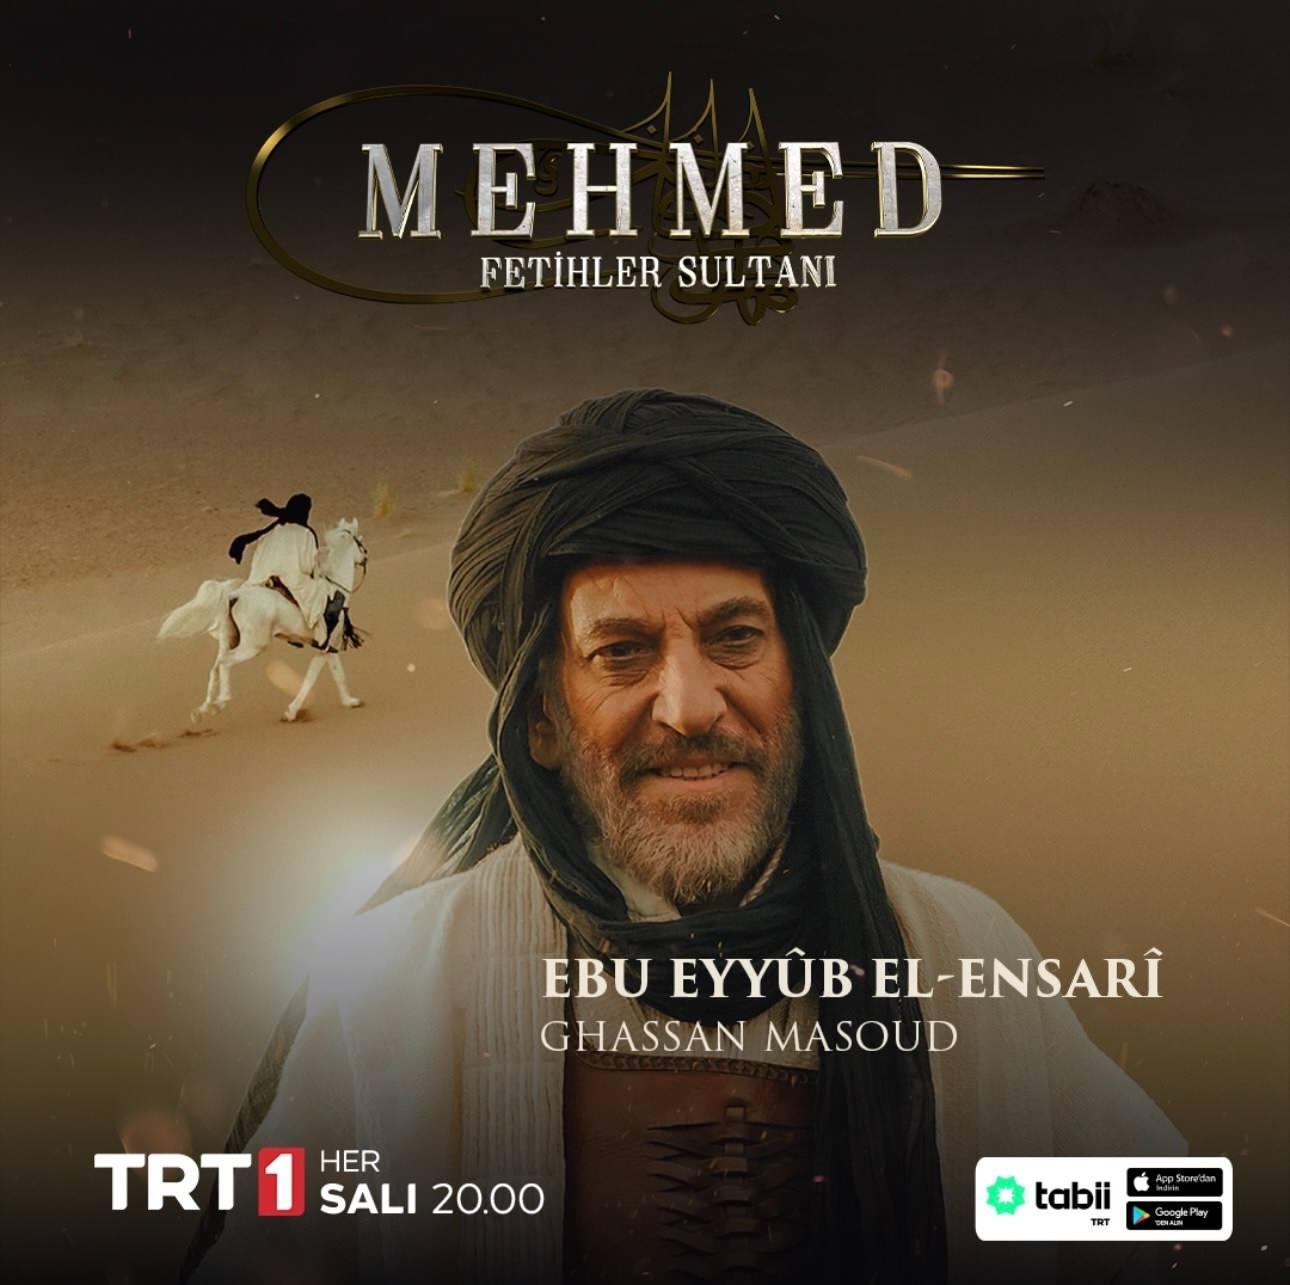  Mehmed Fetihler Sultanı dizisi Ghassan Massoud